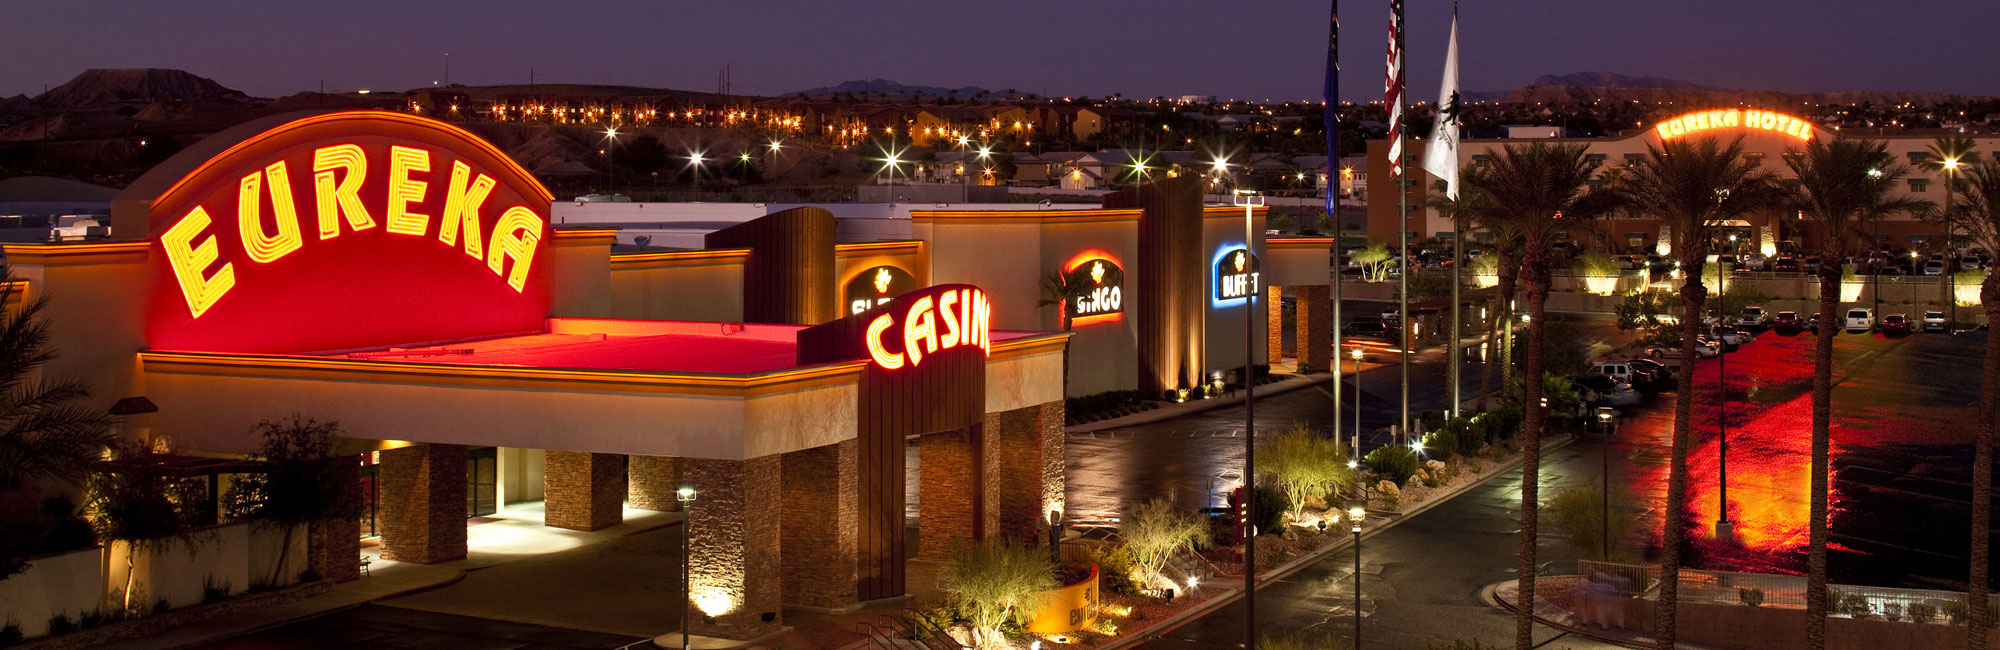 Banner Eureka Casino